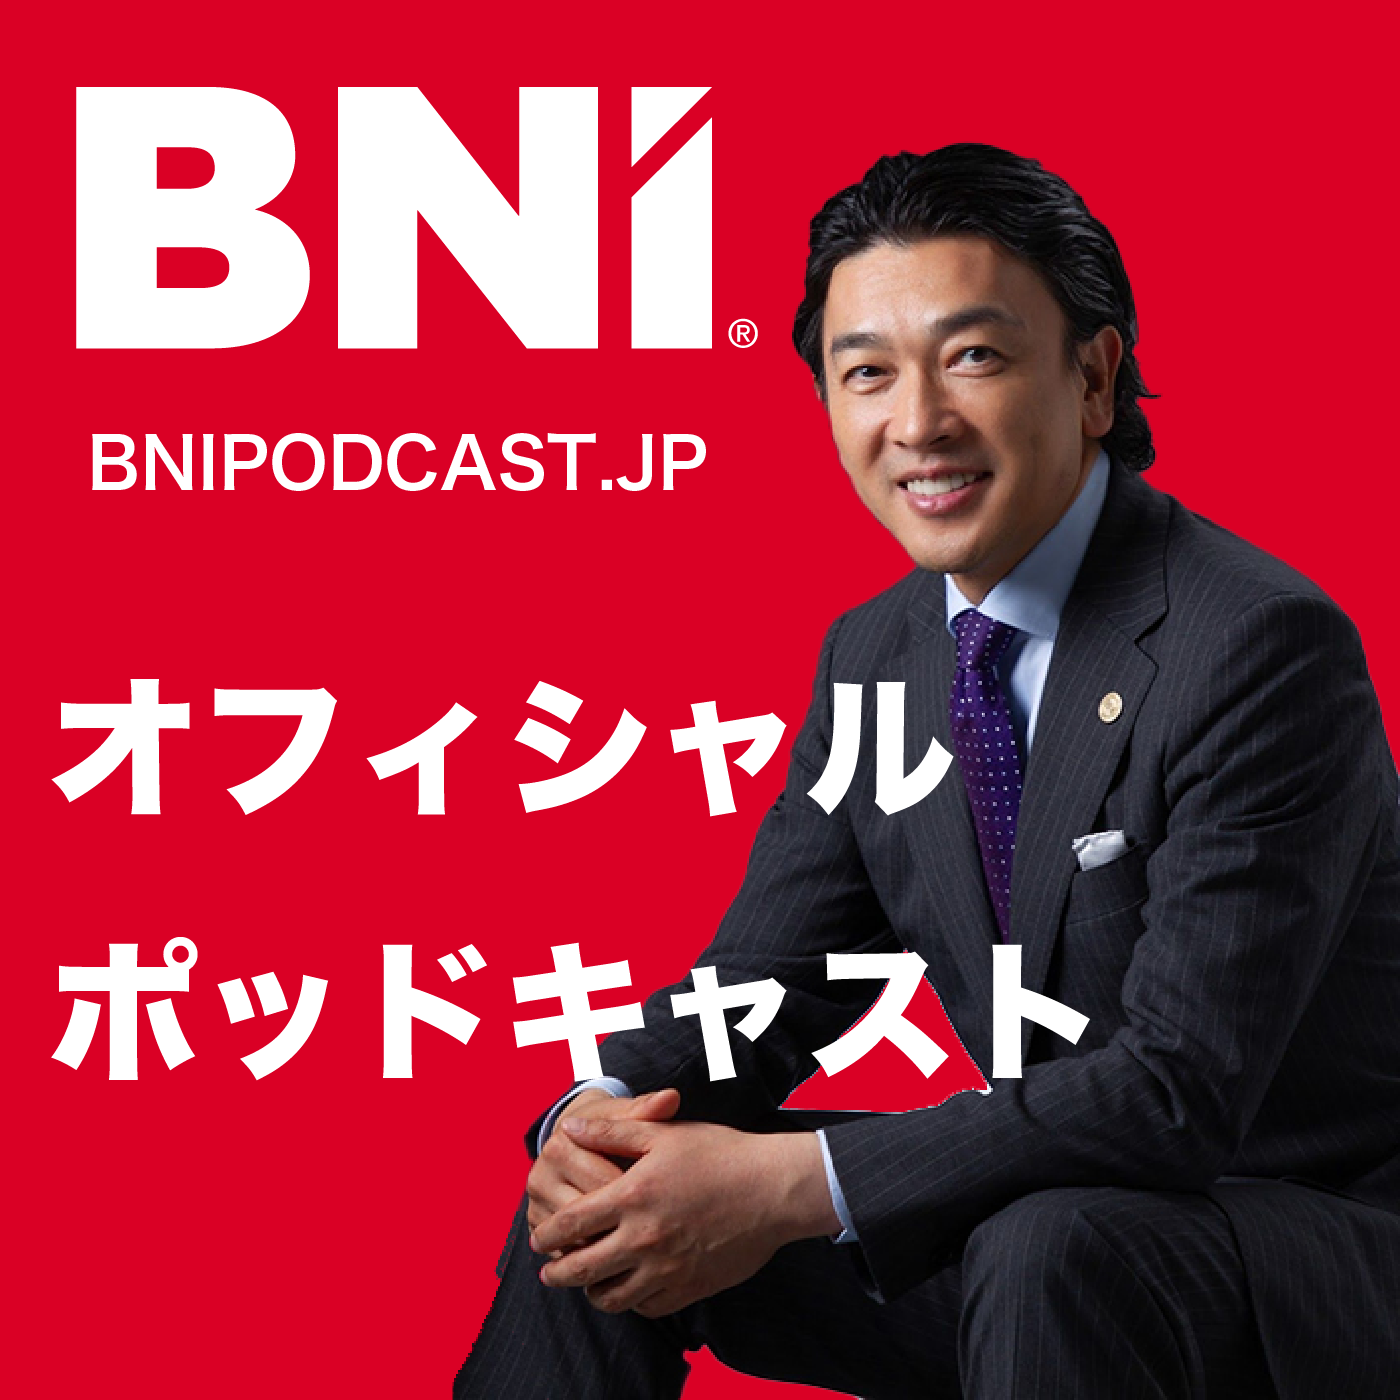 Official BNI Podcast